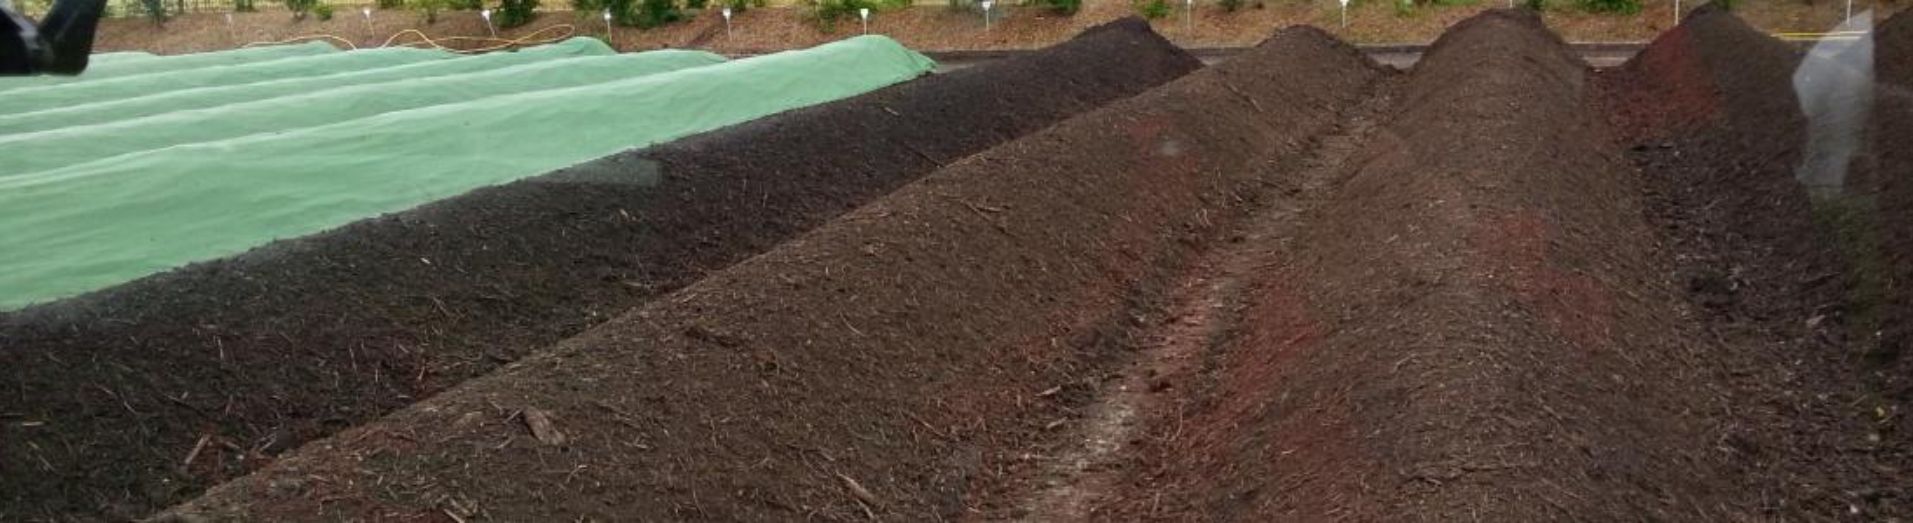 Organic farm Maurer - Compost turner TG 201 teaser